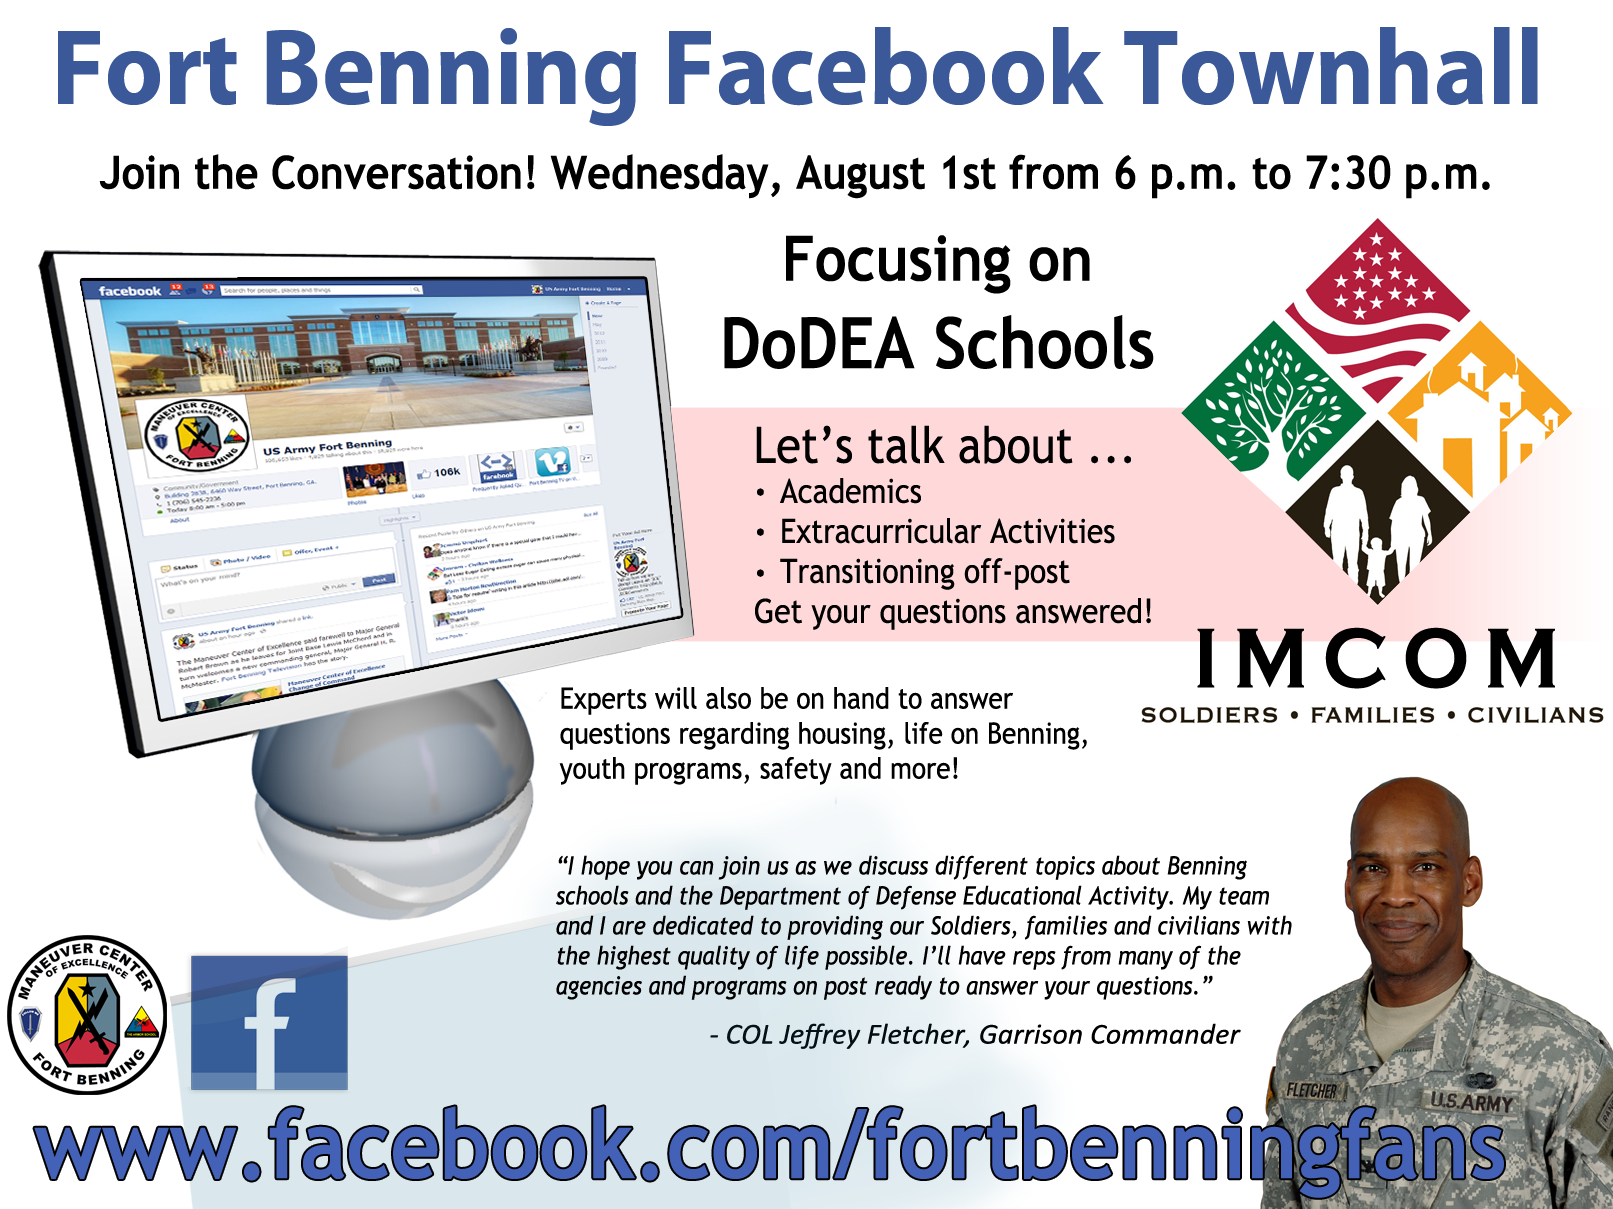 Fort Benning Facebook Townhall